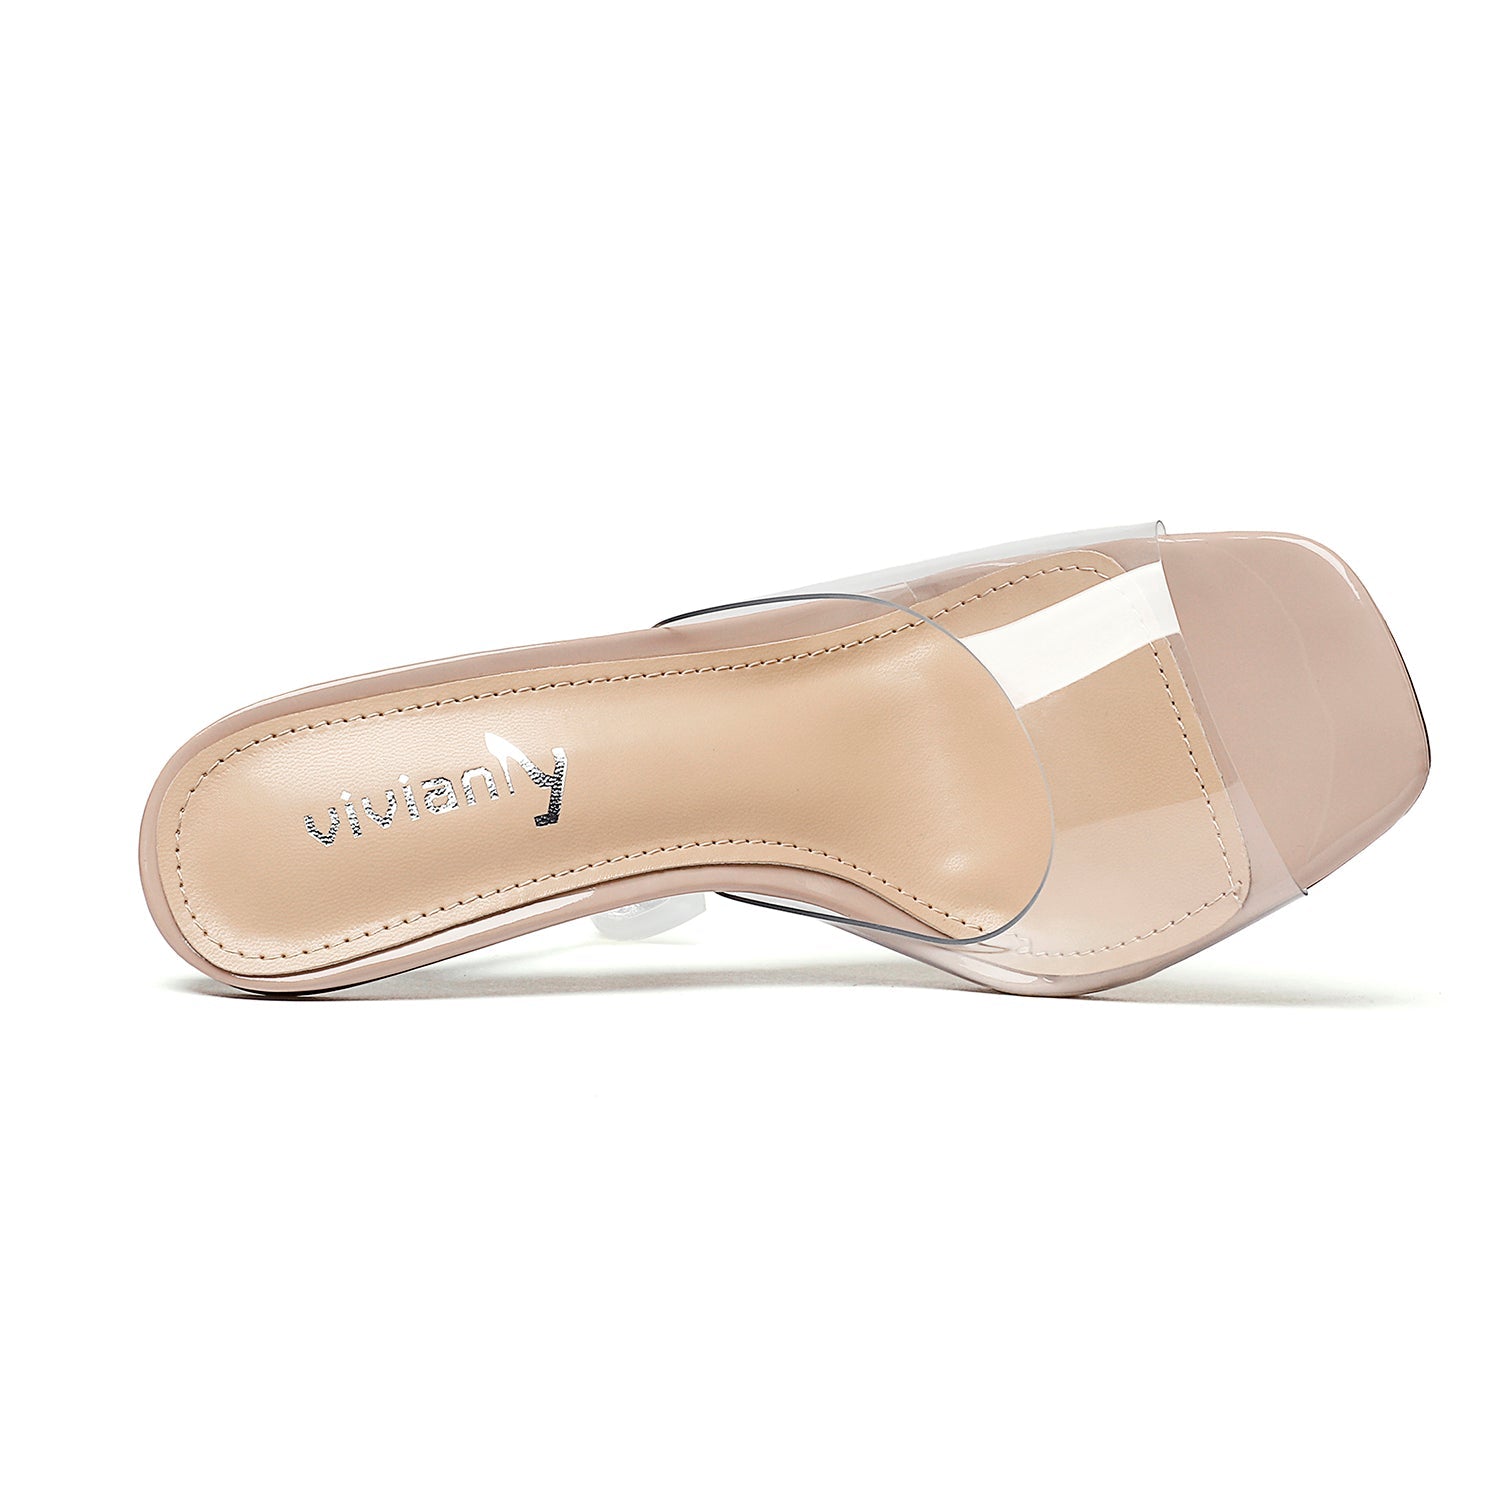 Theresa 109 Clear Peep Toe Heels - Vivianly Shoes - Stilettos